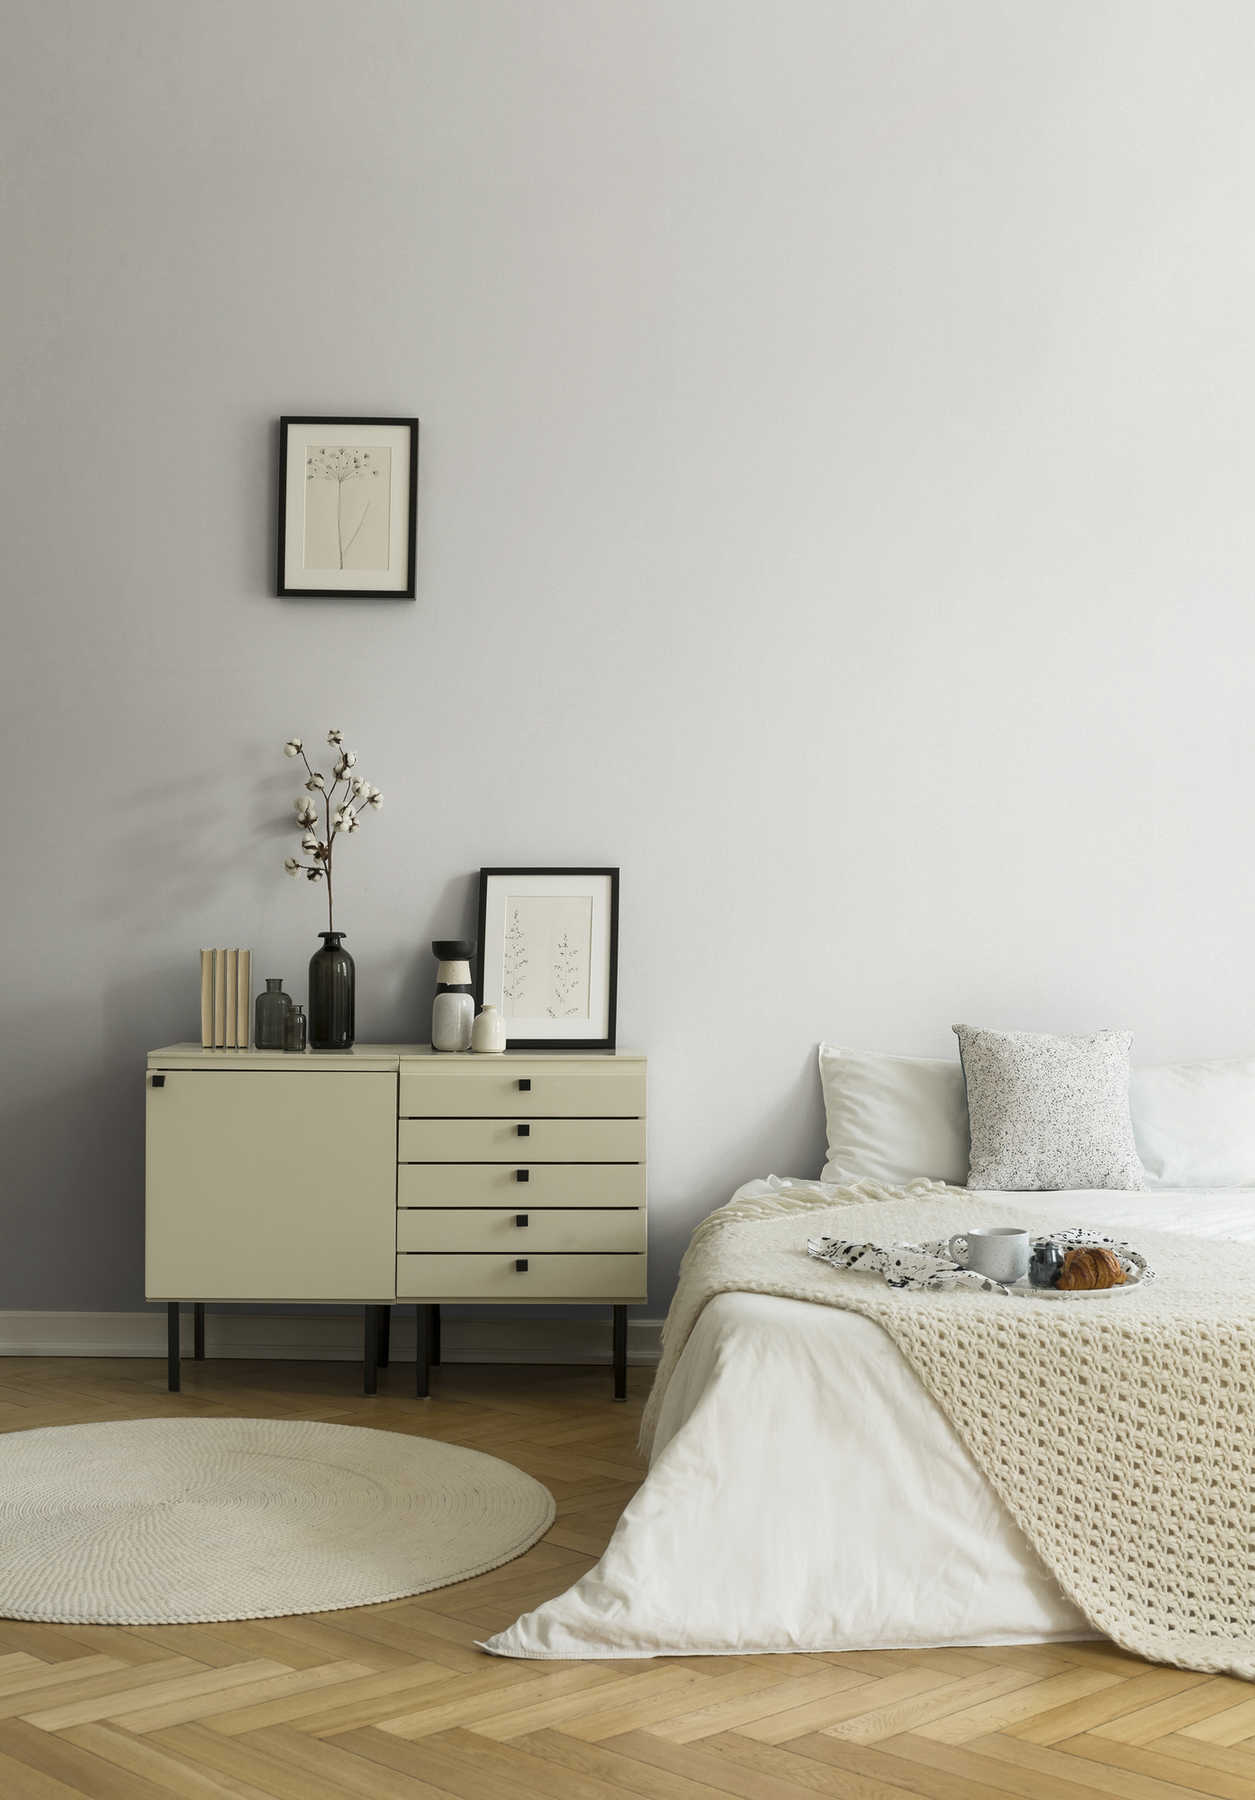             Textured wallpaper plain with linen look - cream, grey, white
        